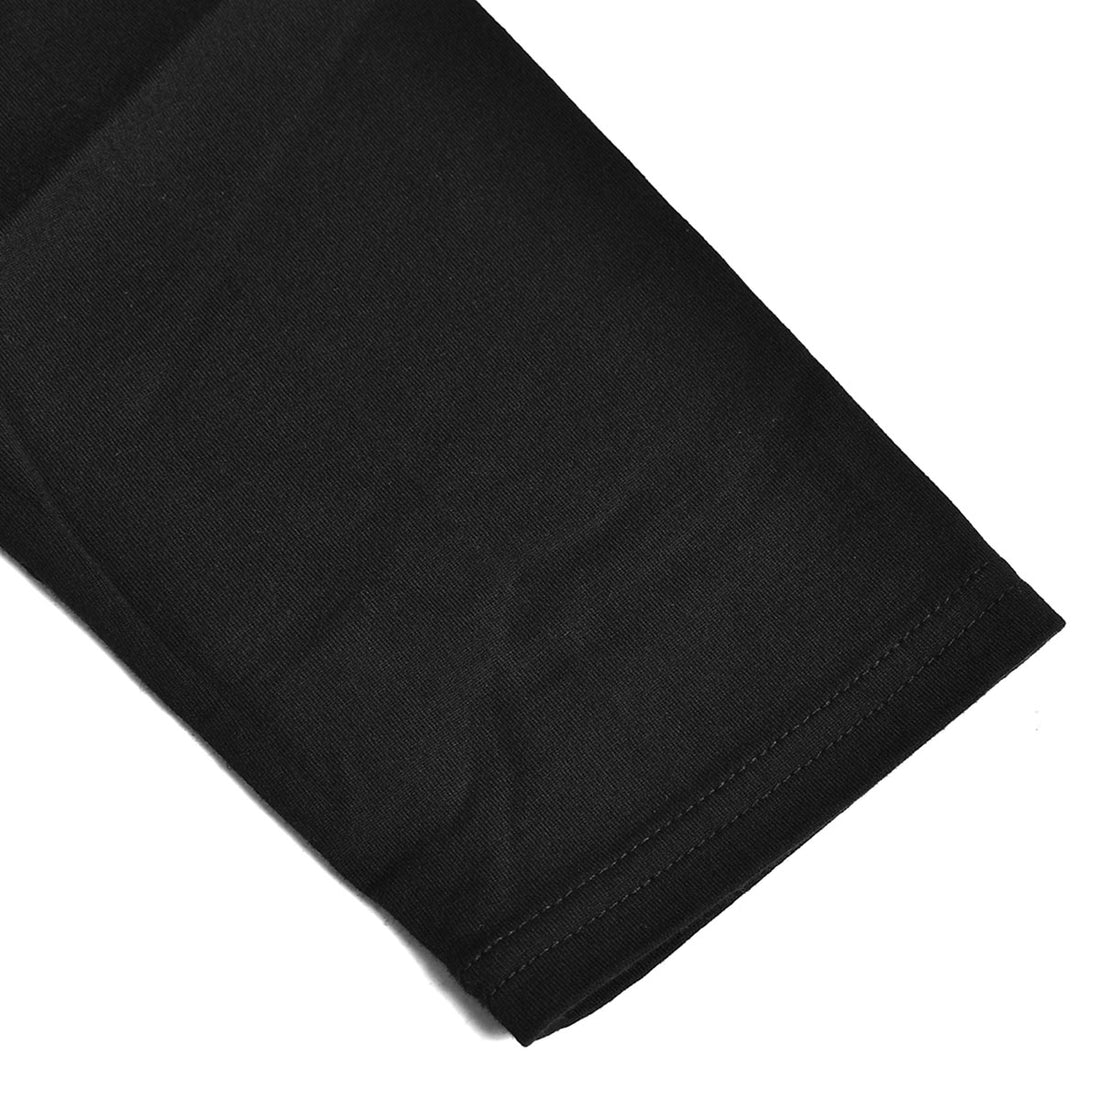 [TODAYFUL]Cottonsilk Useful Long T-shirts/BLACK(12220612)